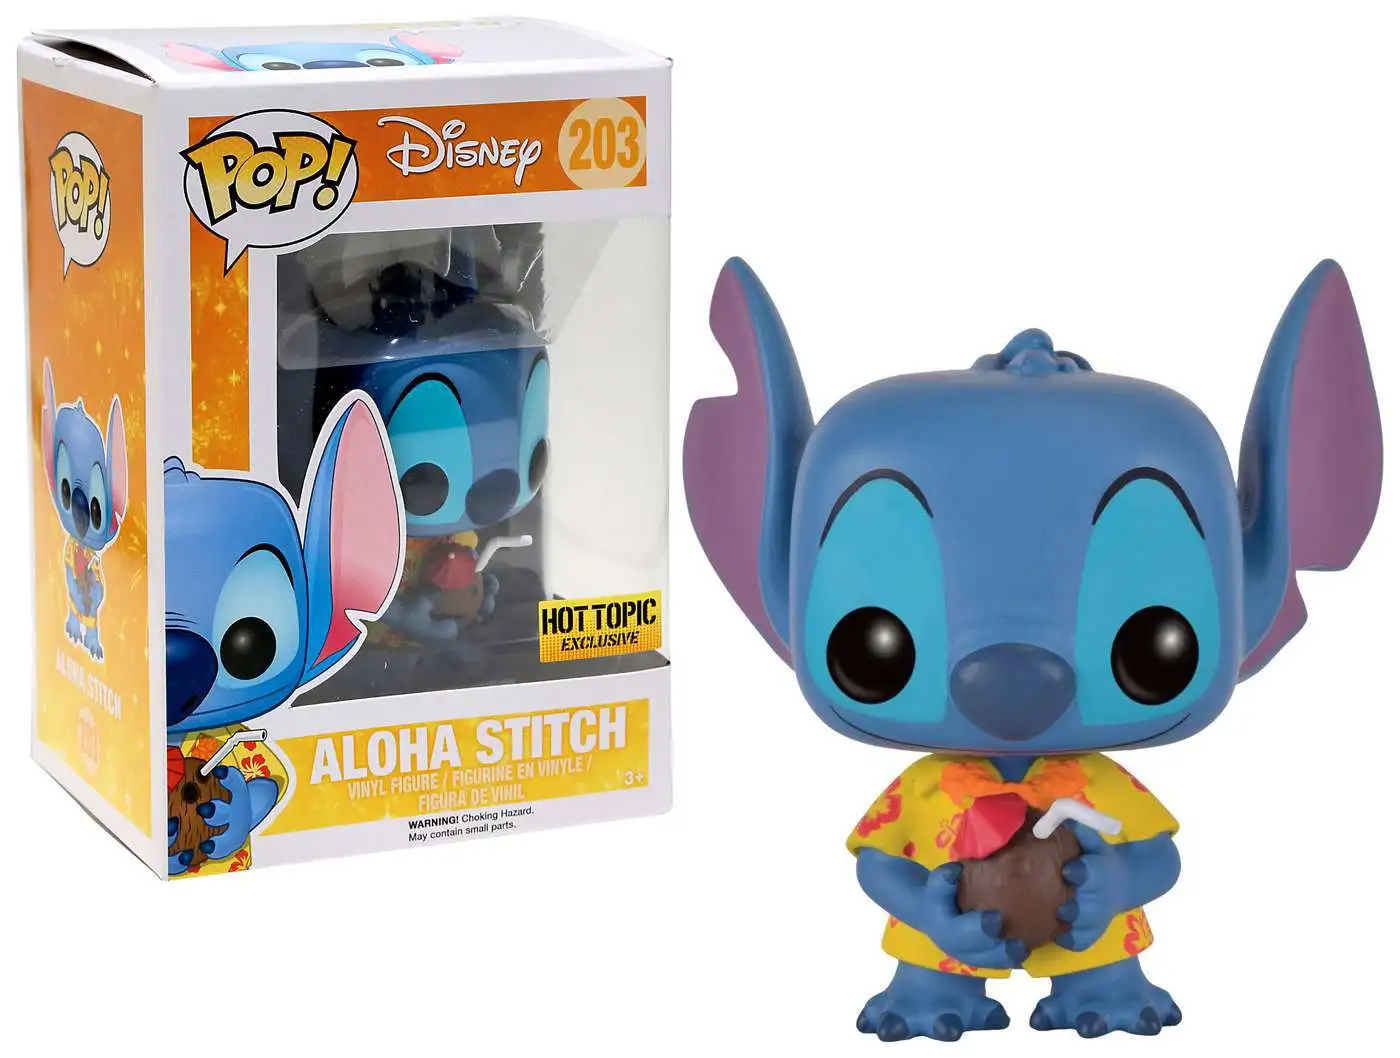 Funko Pop Disney 203 Aloha Stitch Hot Topic for sale online 